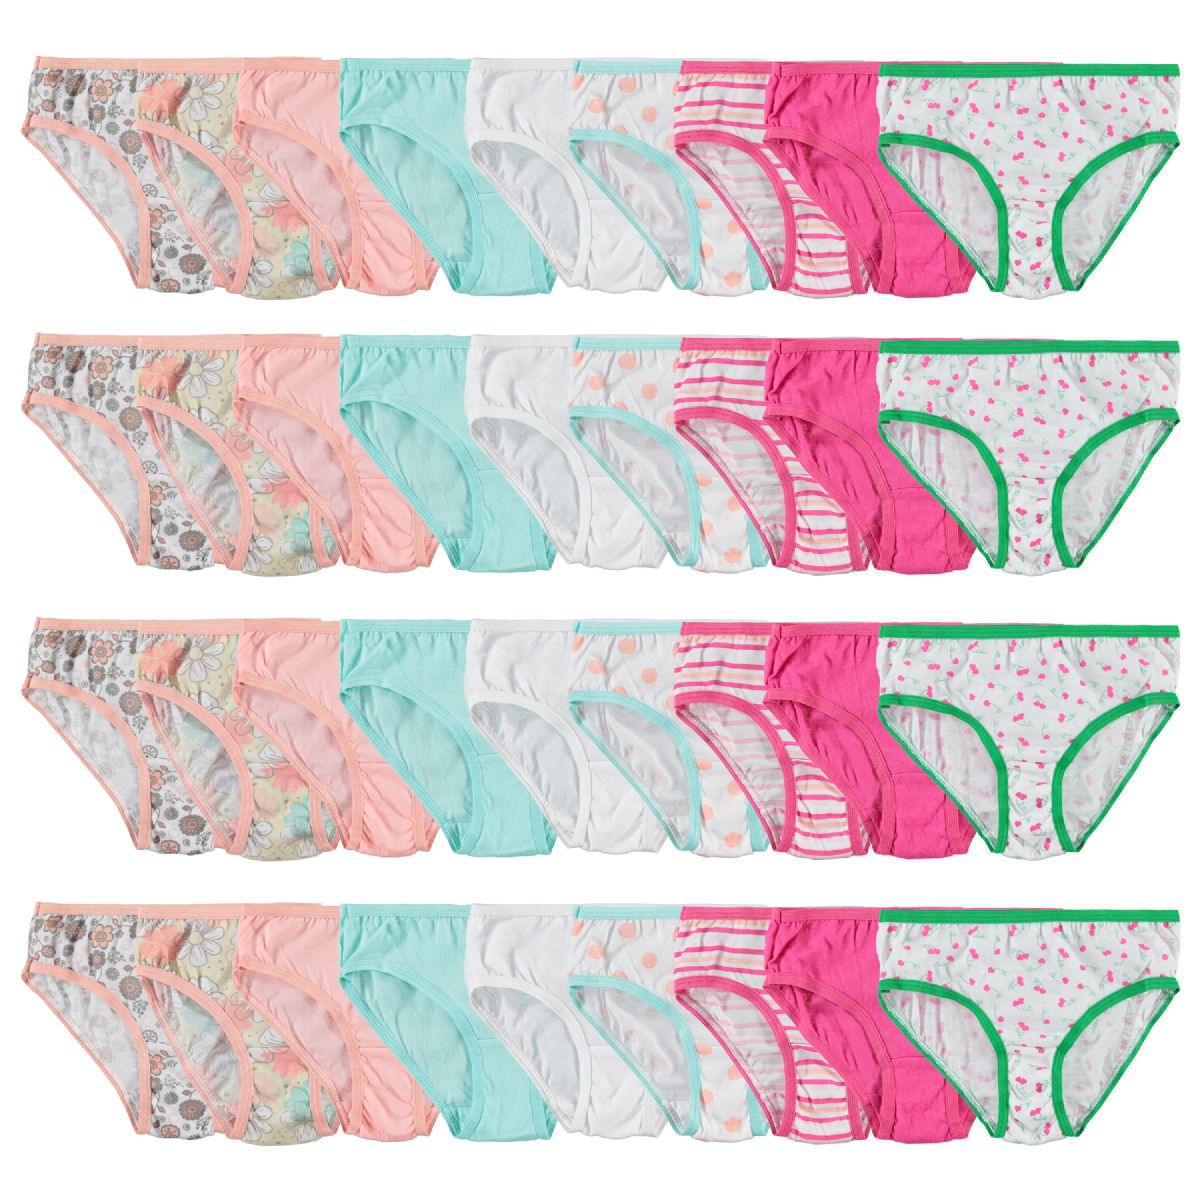 72 Wholesale Girls Cotton Blend Assorted Printed Underwear Size 14